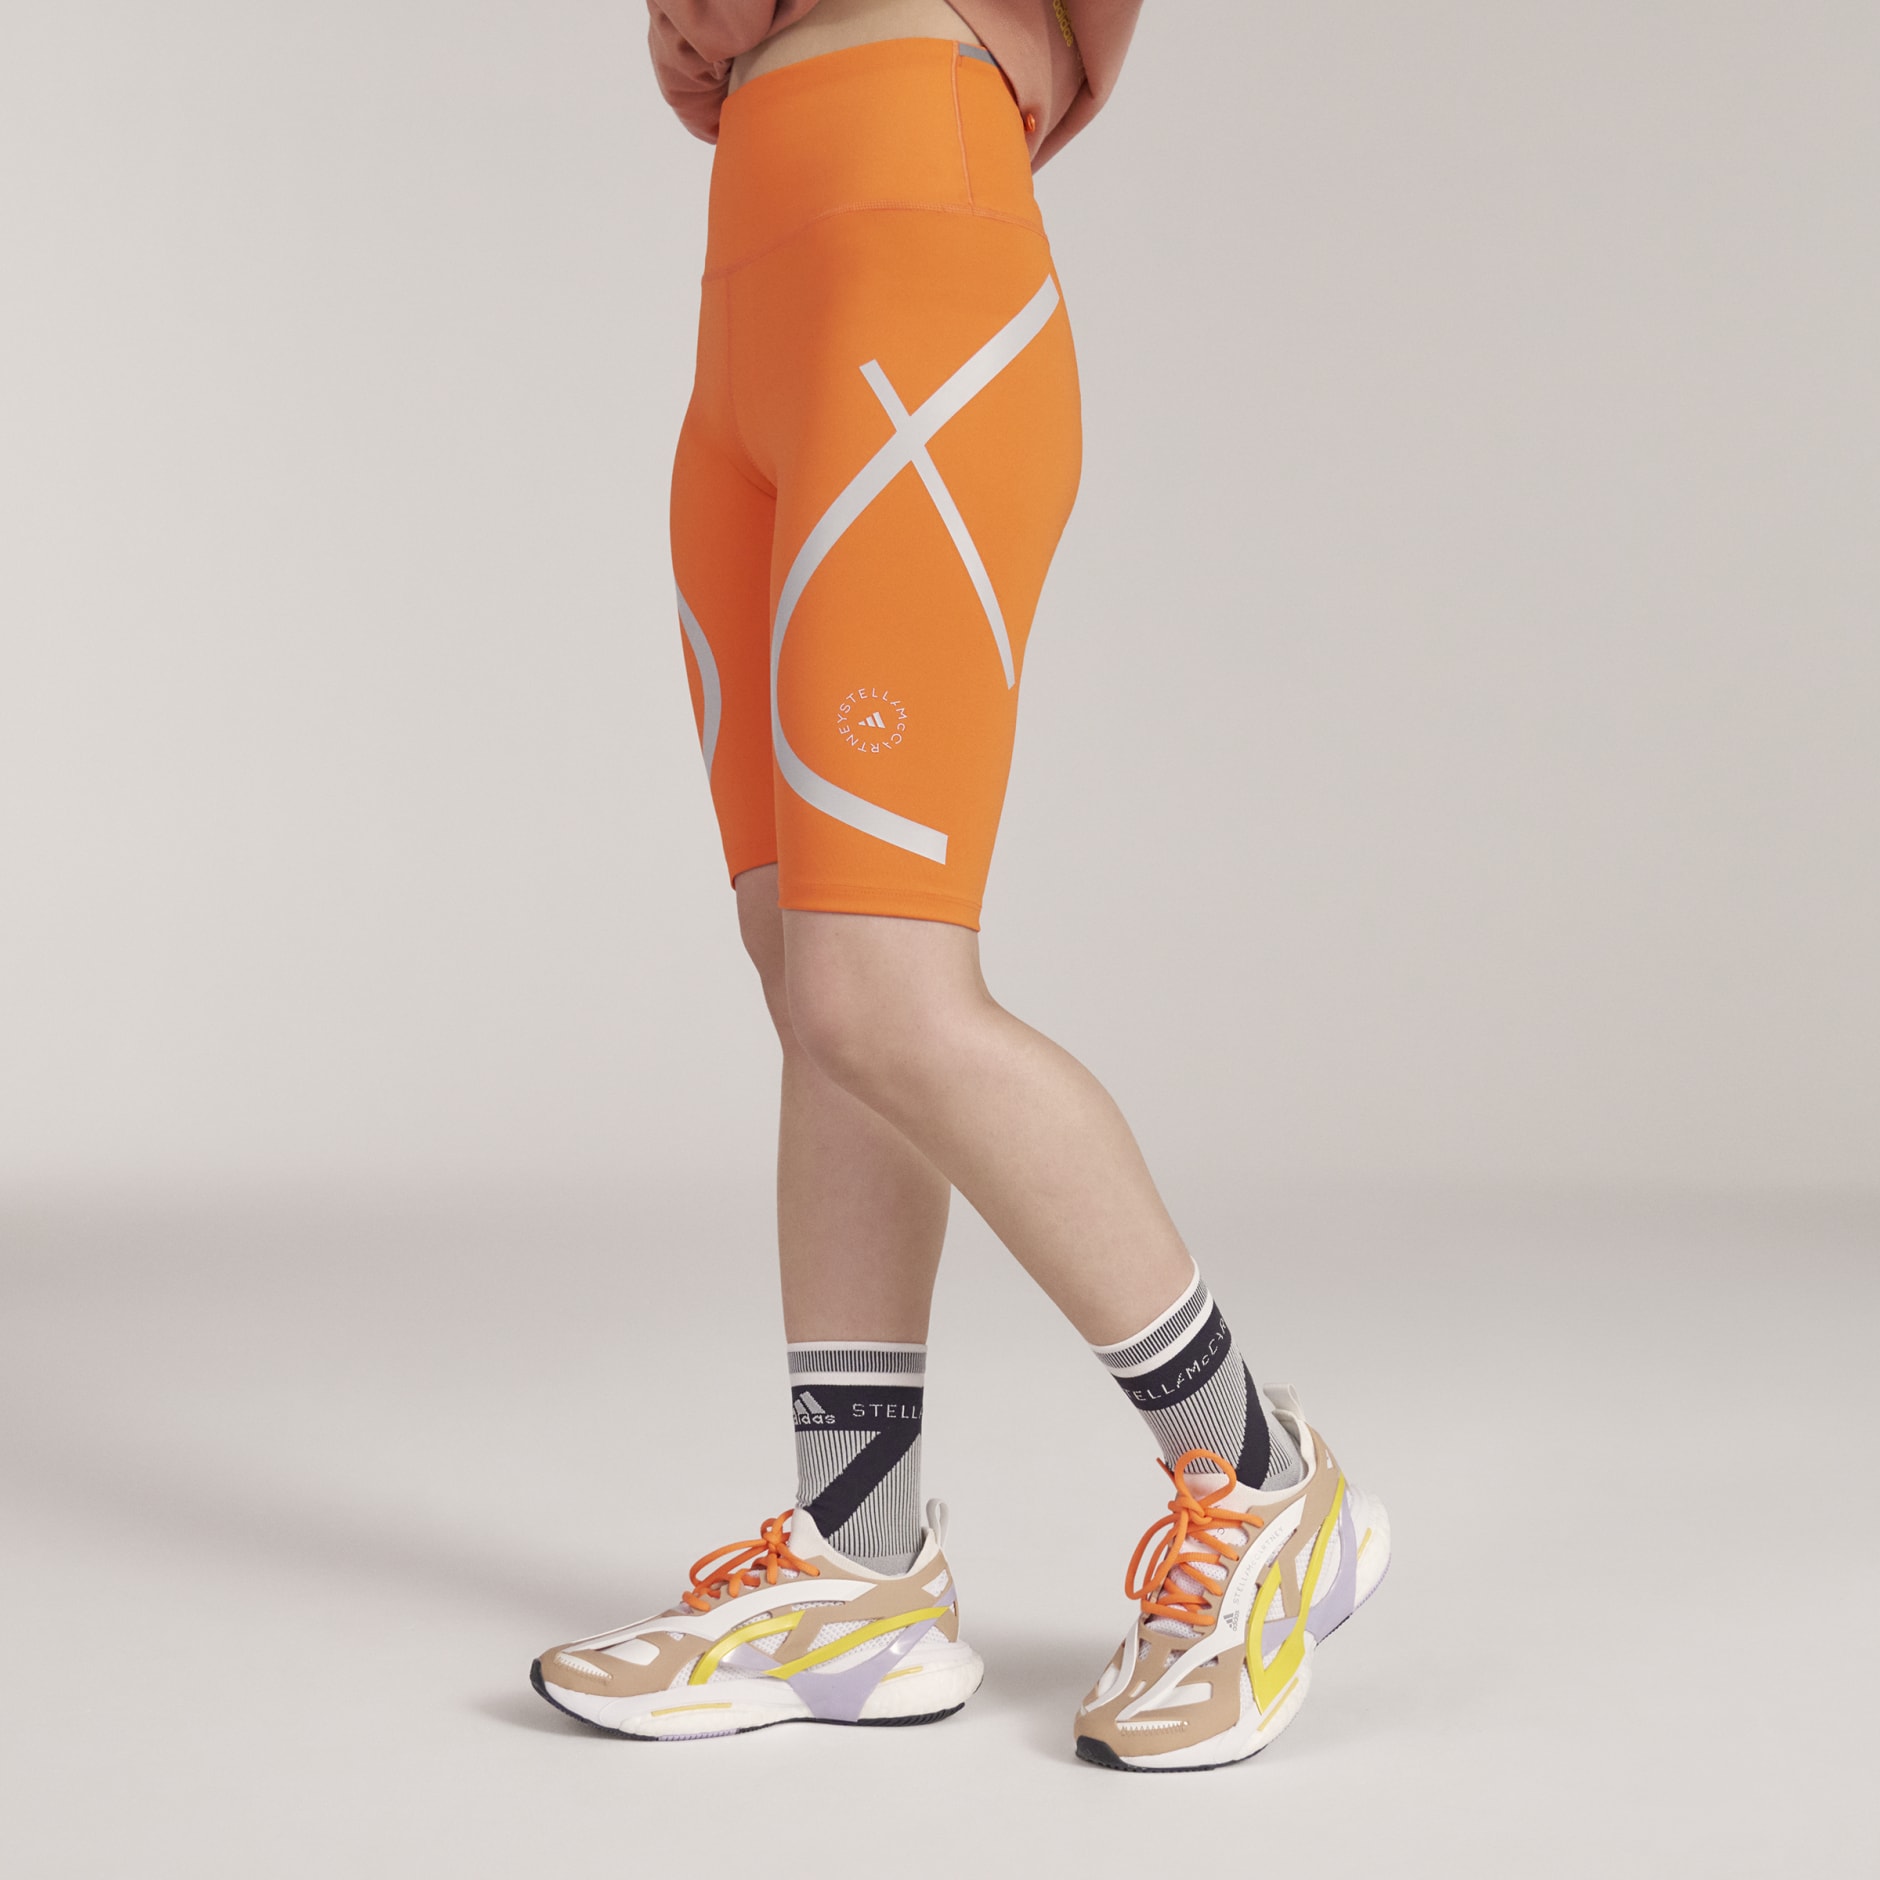 TruePace cycling shorts, adidas by Stella McCartney